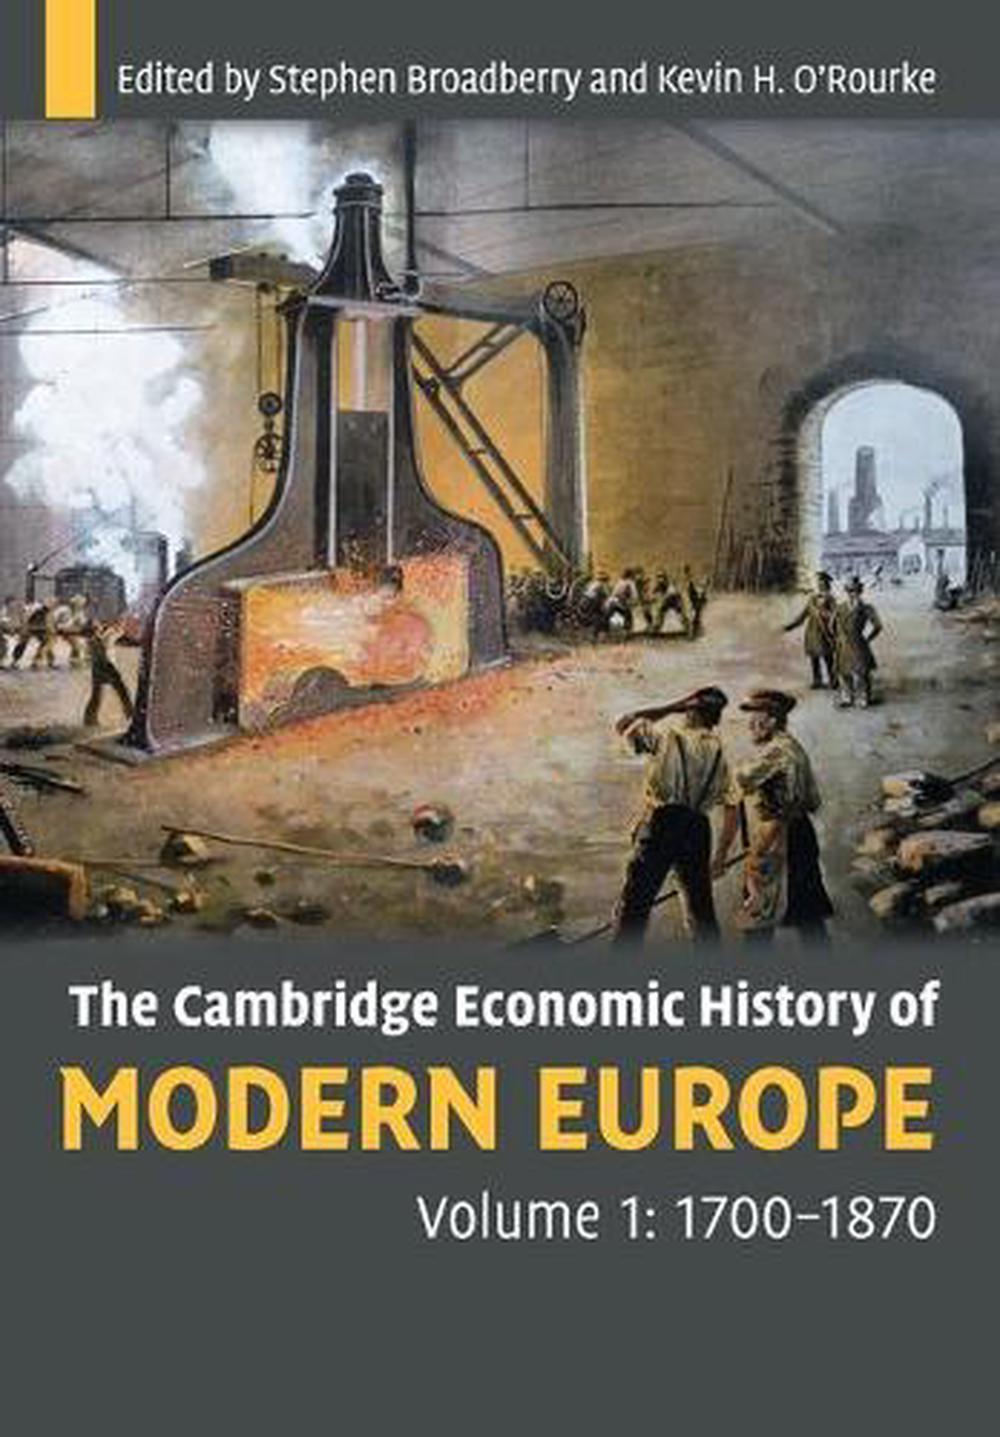 Cambridge Economic History of Modern Europe Volume 1, 17001870 by